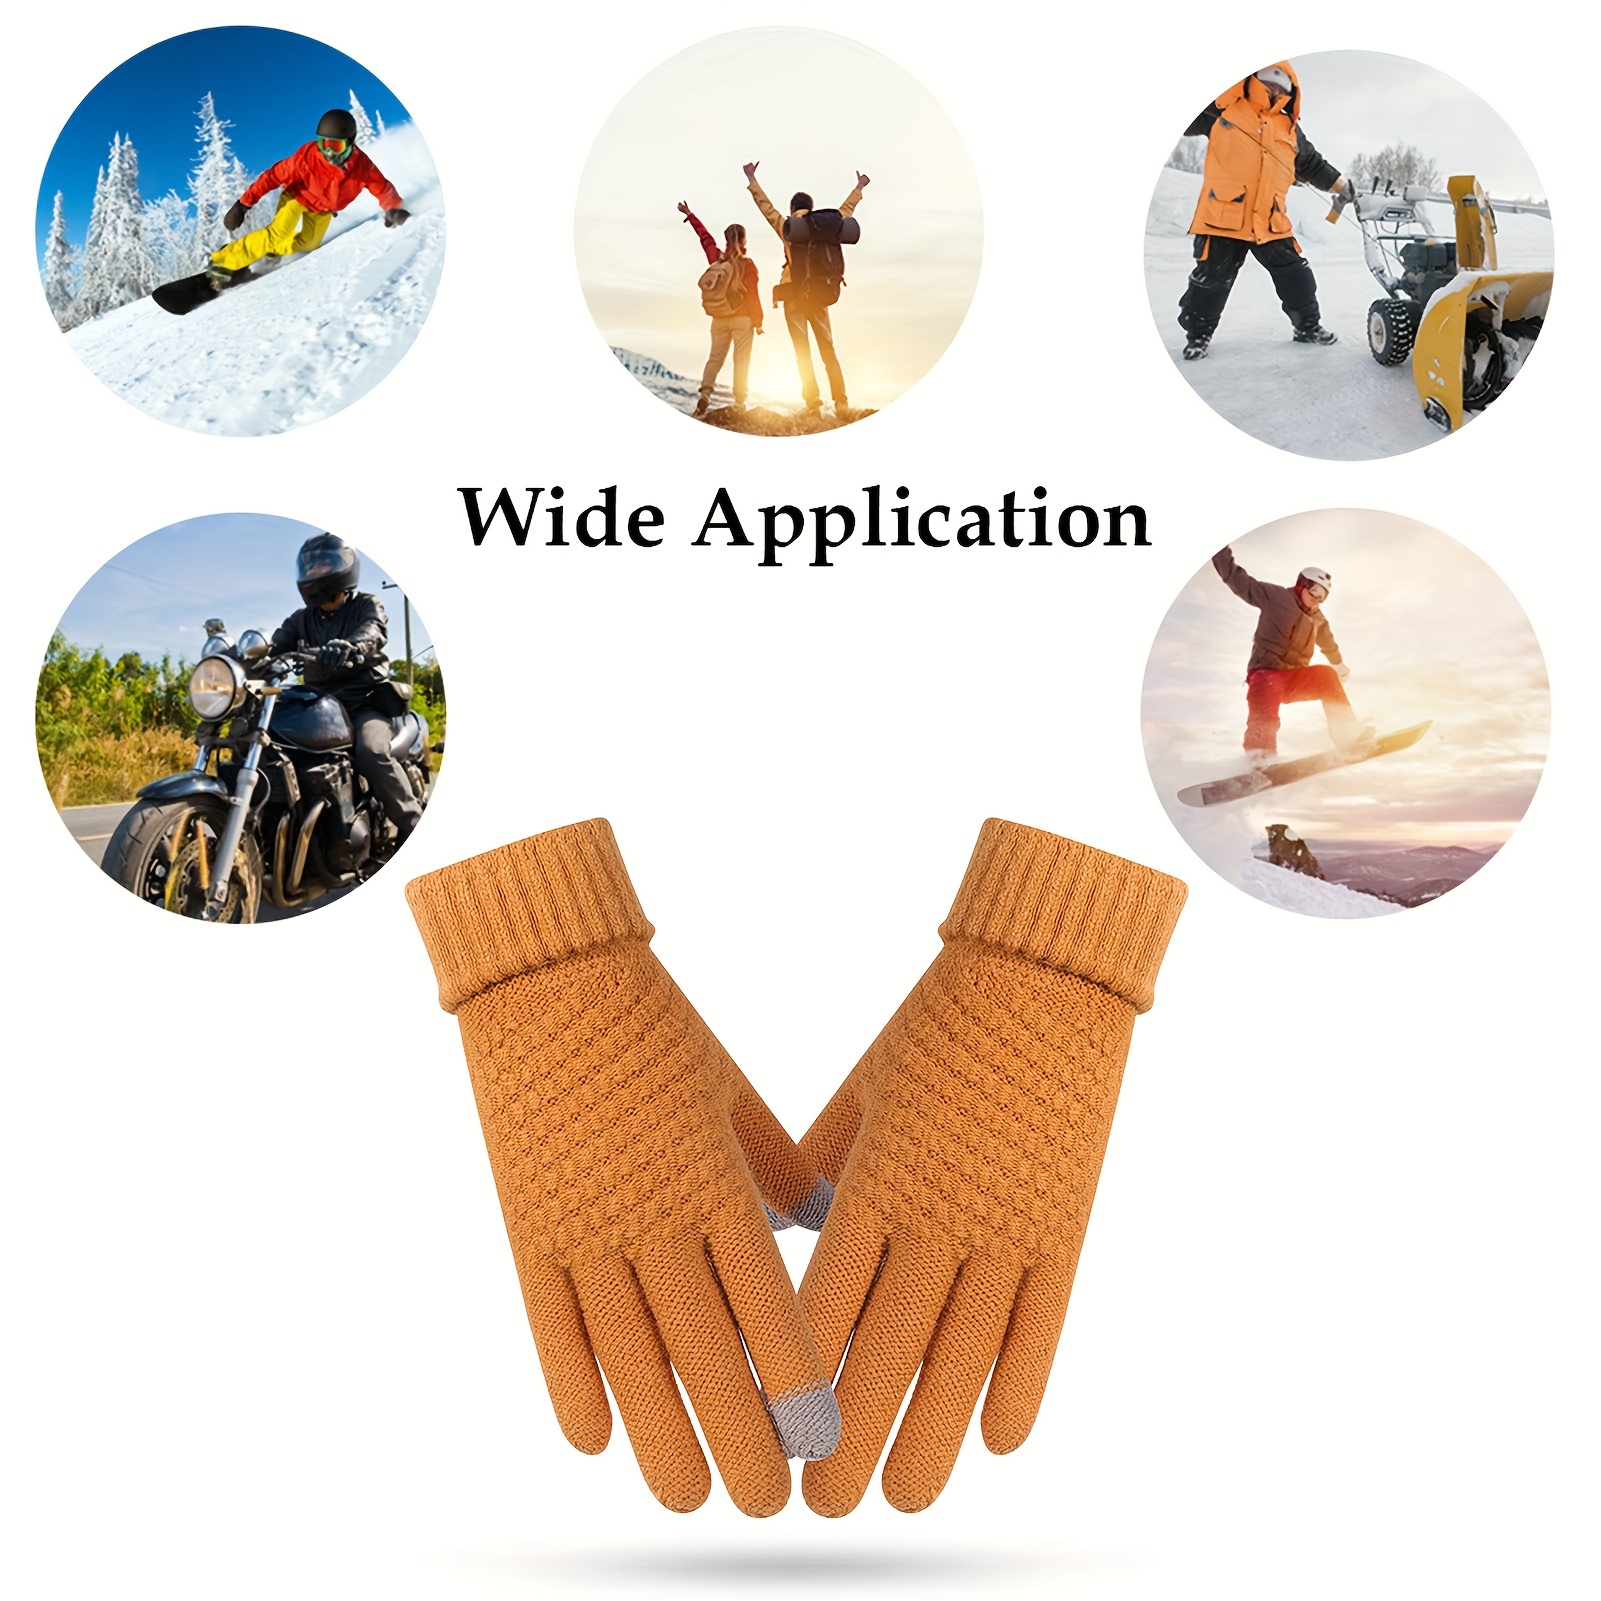 Winter Touch Screen Gloves Women Men Warm Stretch Knit - Temu